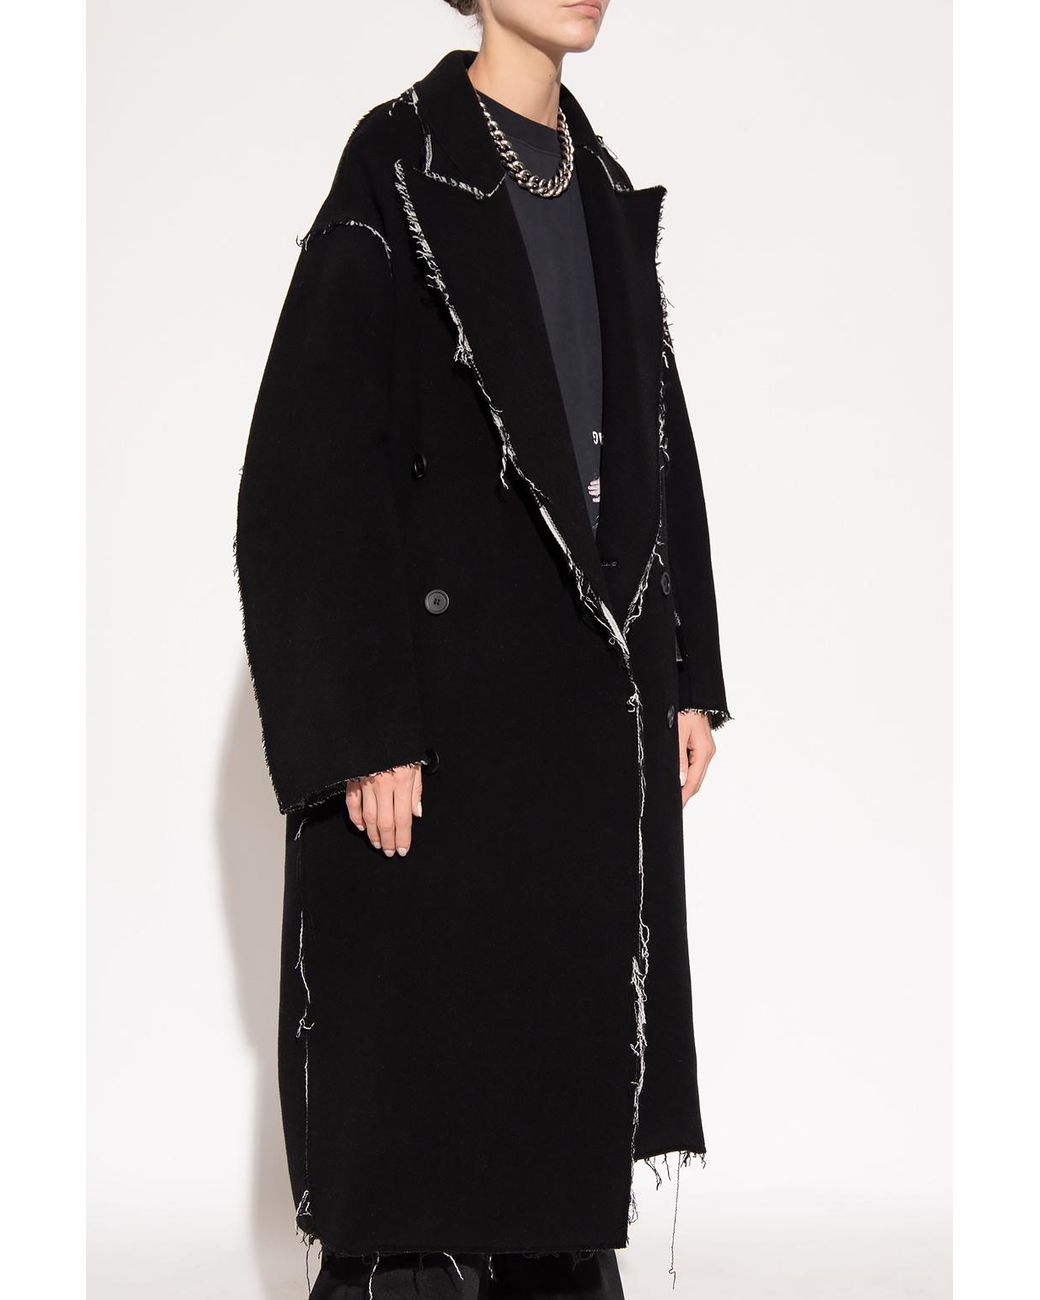 Balenciaga Wool Coat in Black | Lyst